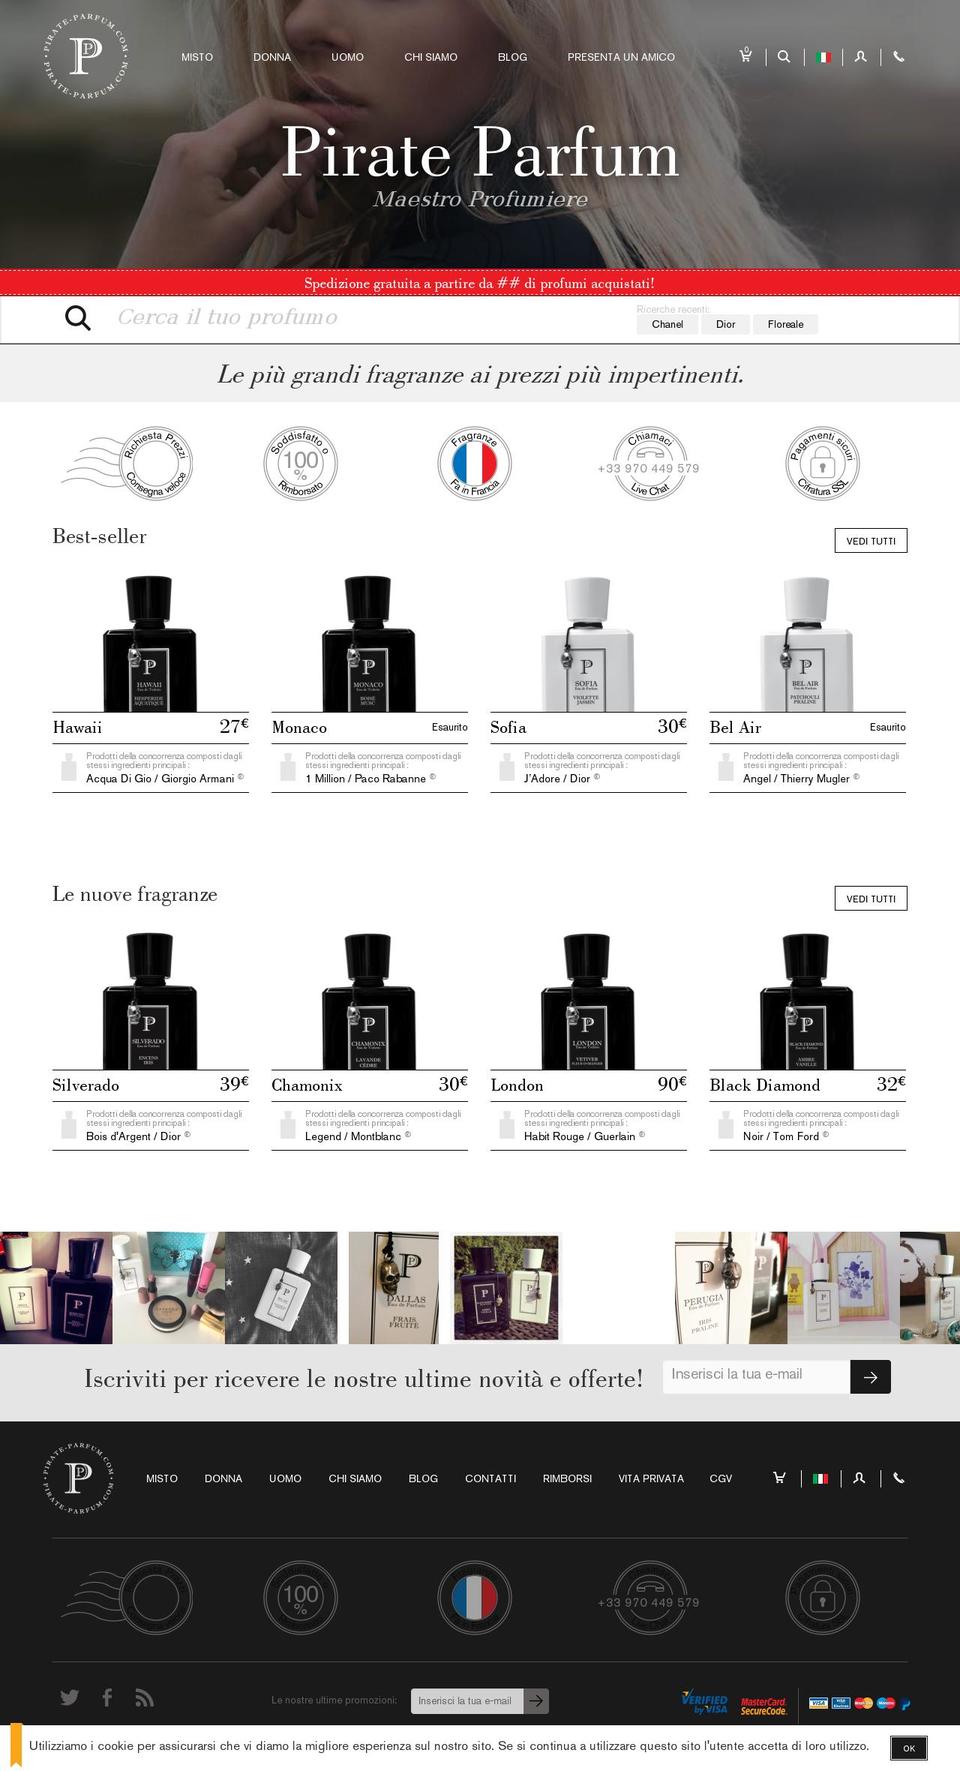 pirate-parfum.it shopify website screenshot